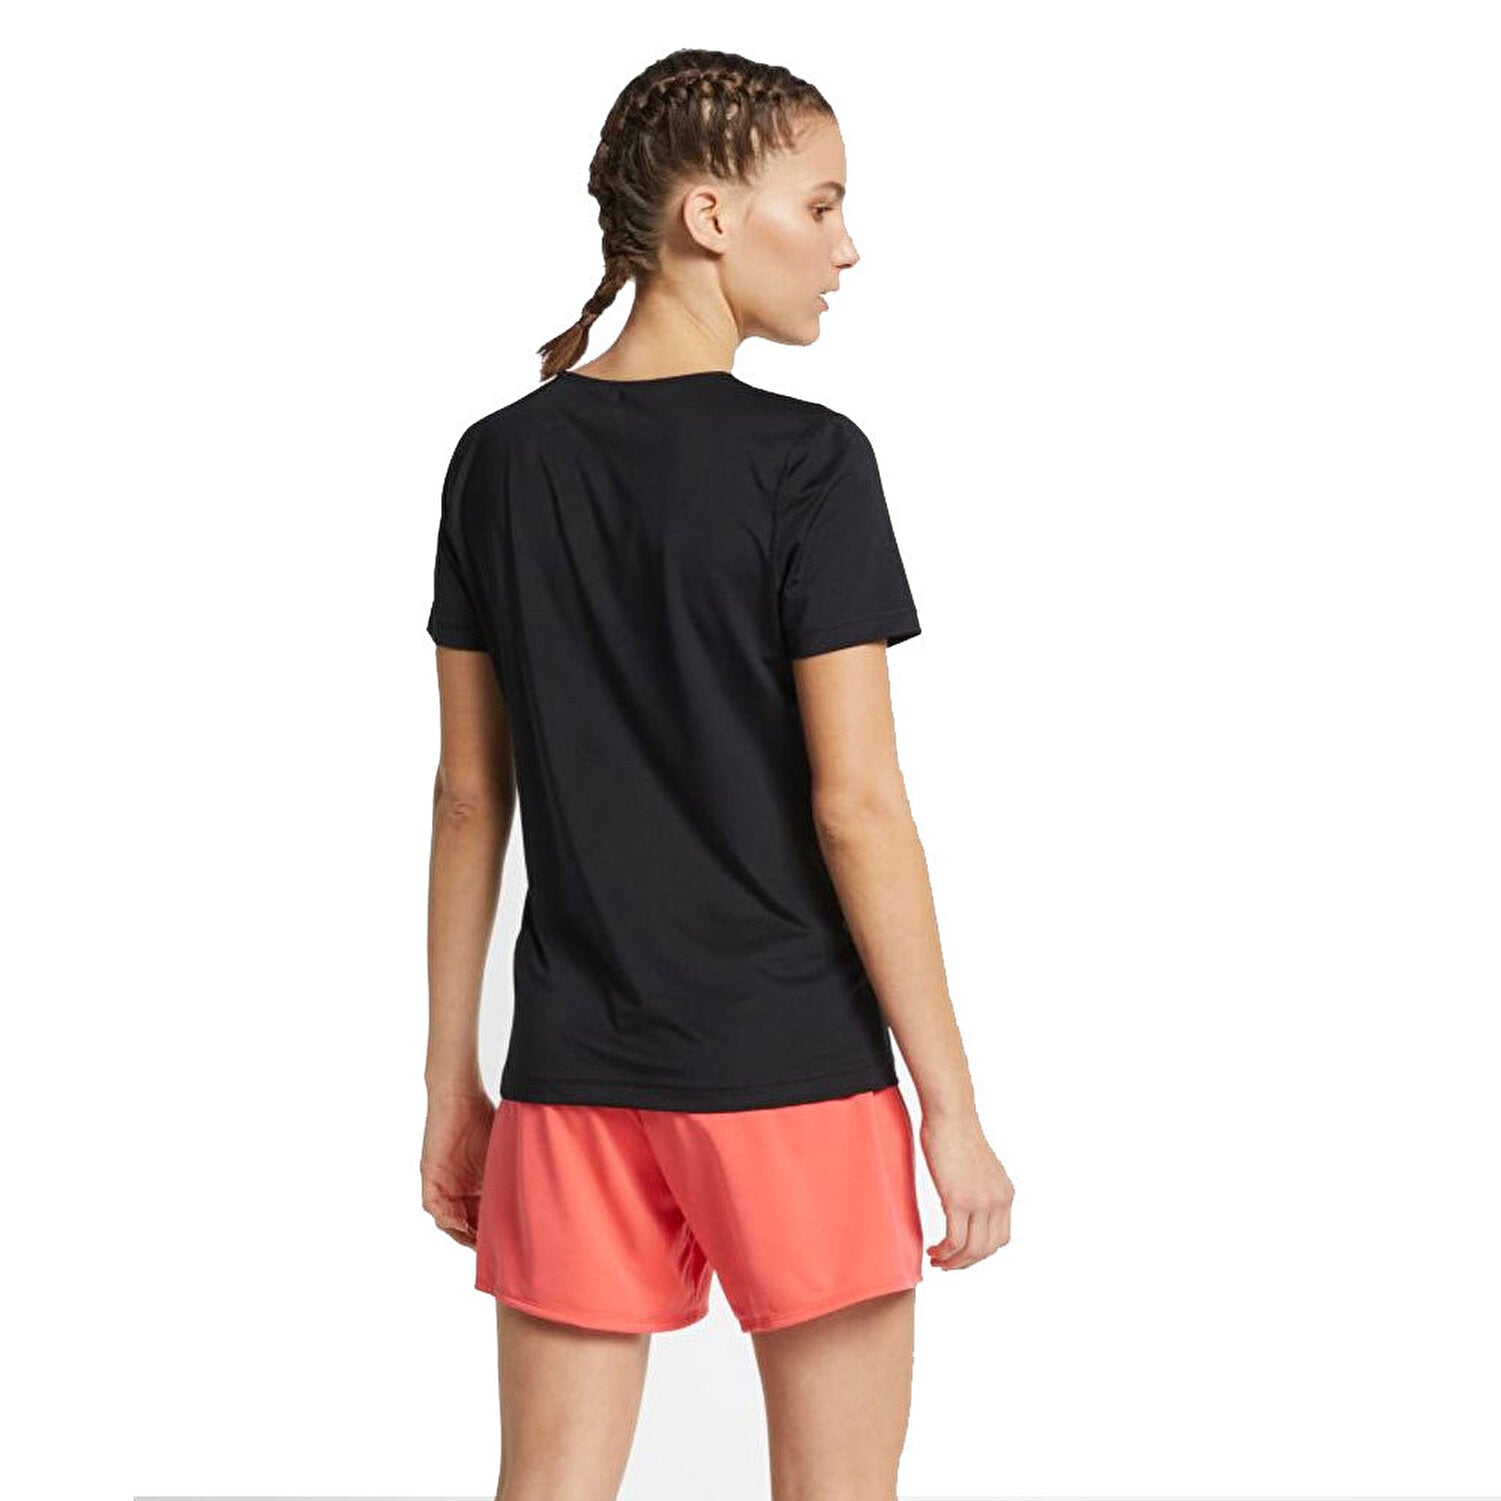 Nike 365 Essential T-shirt women